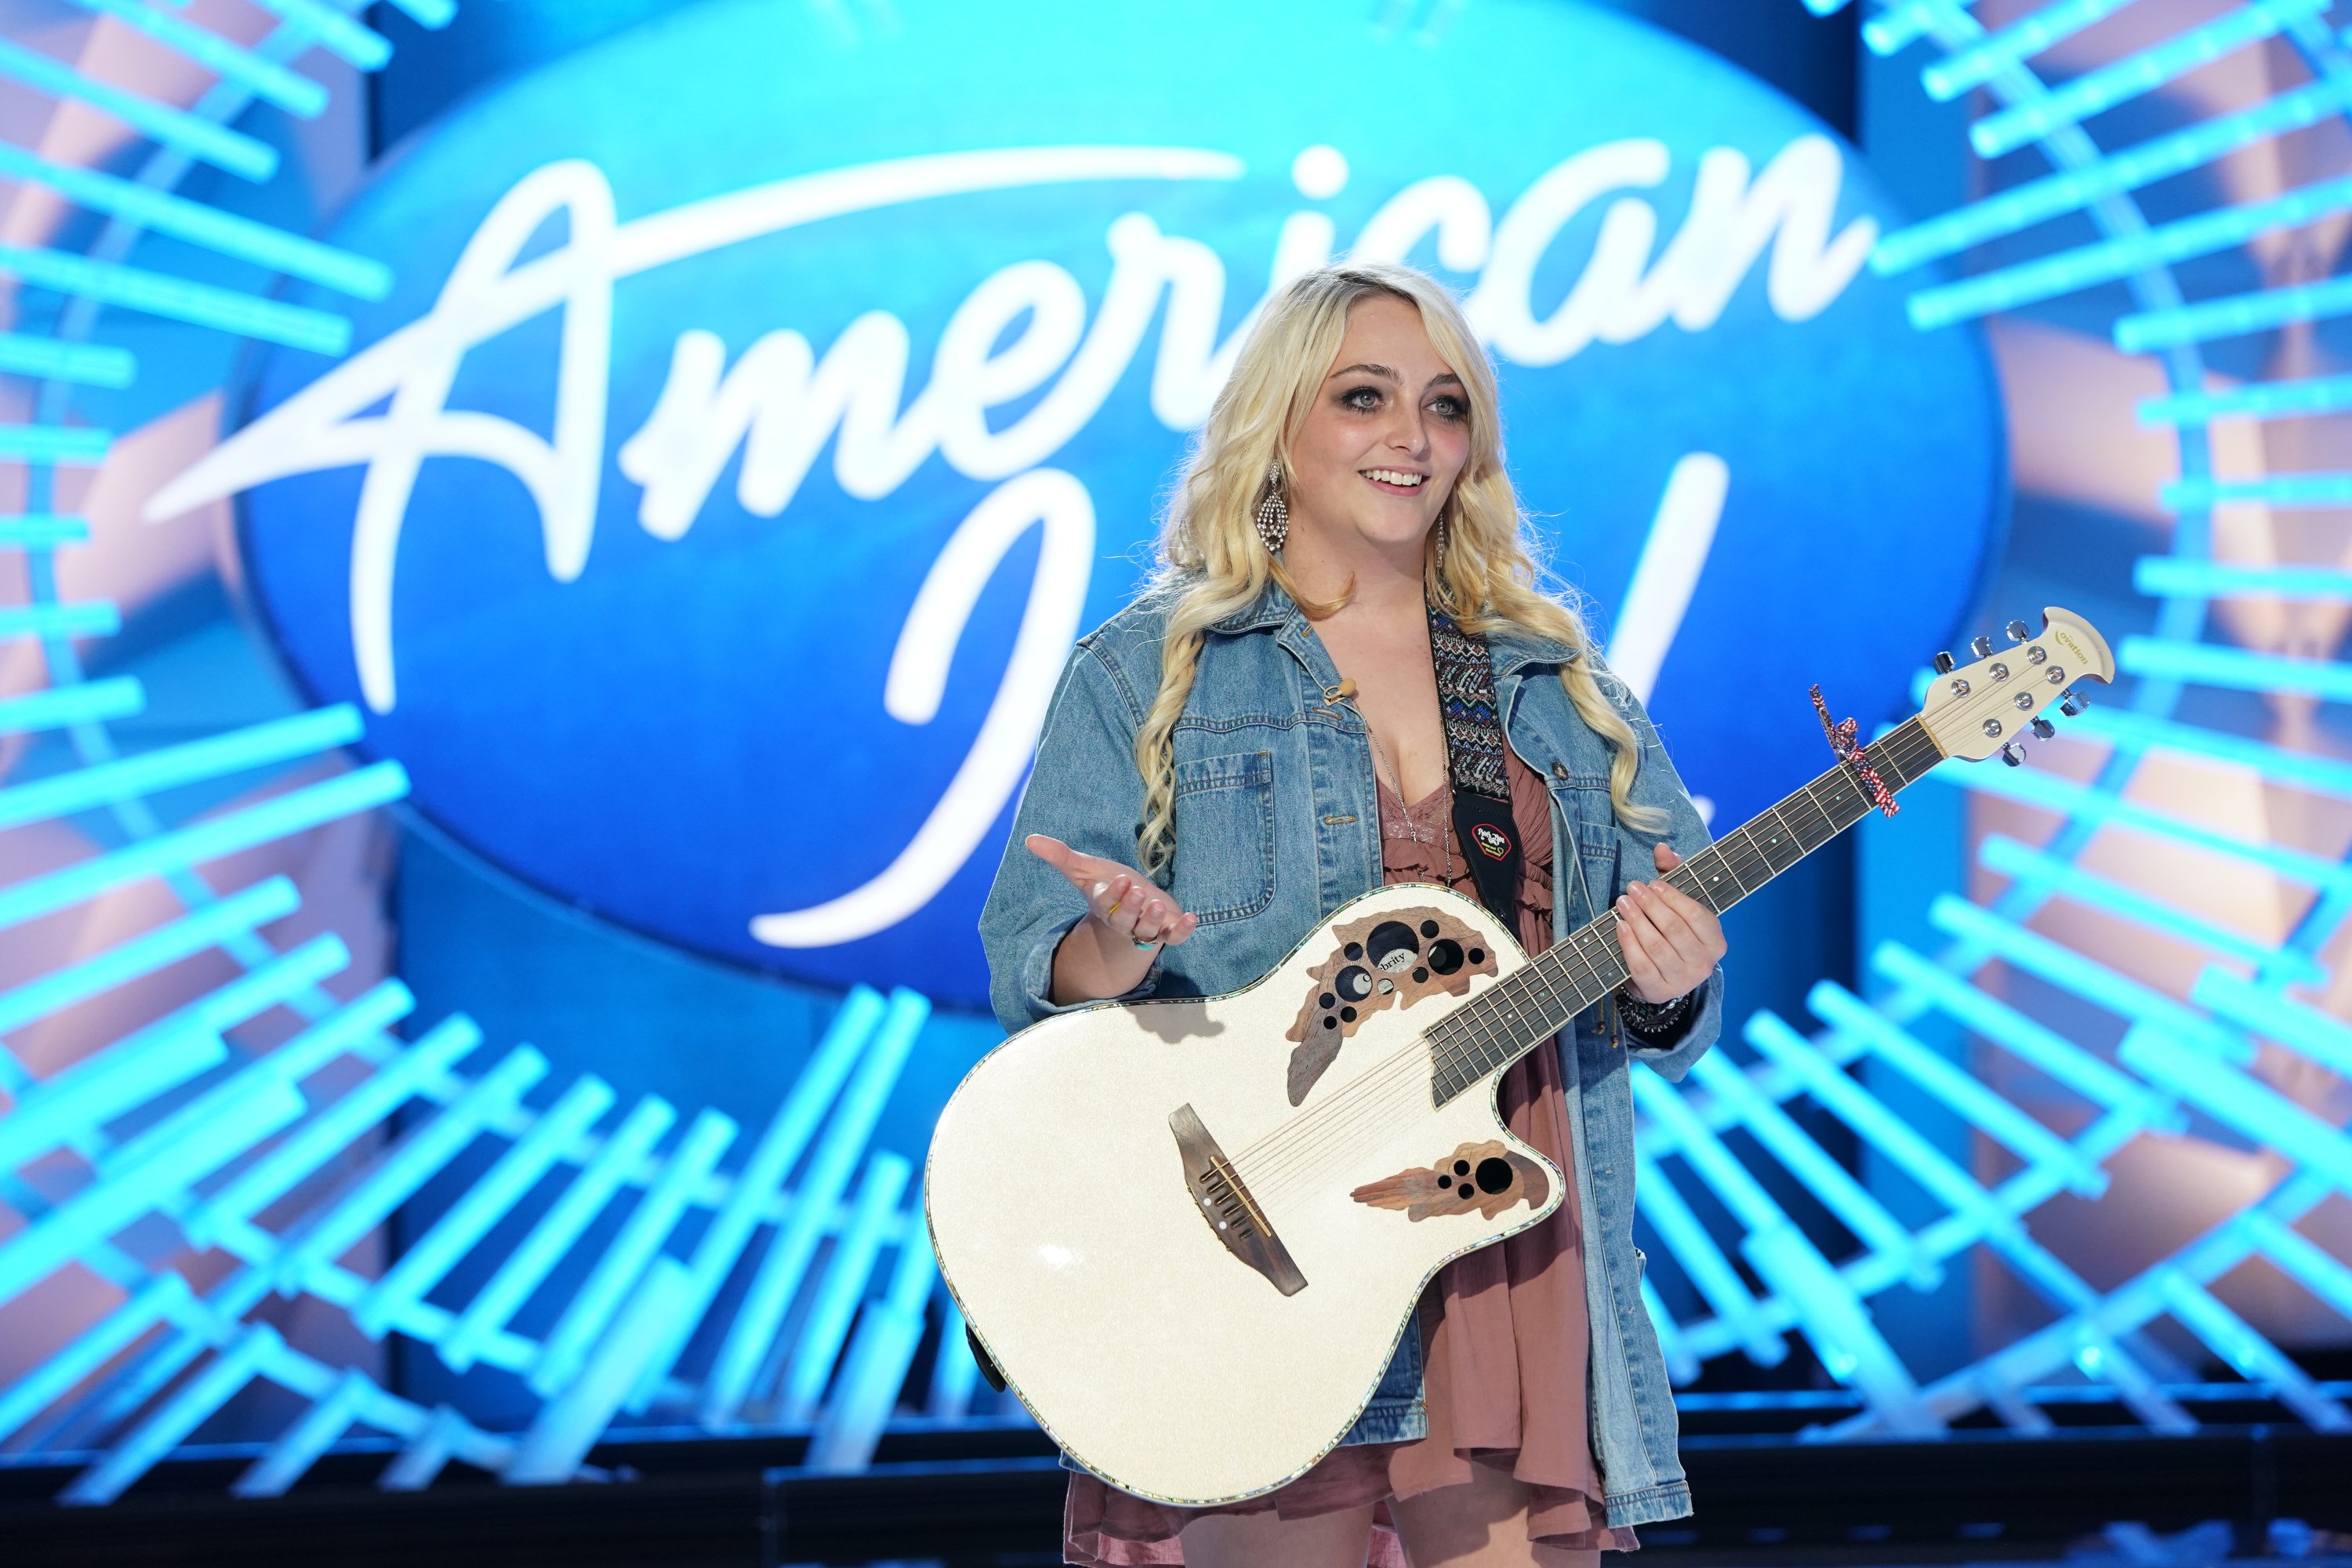 Hunter 'Huntergirl' Wolkonowski standing in front of American Idol sign holding her guitar